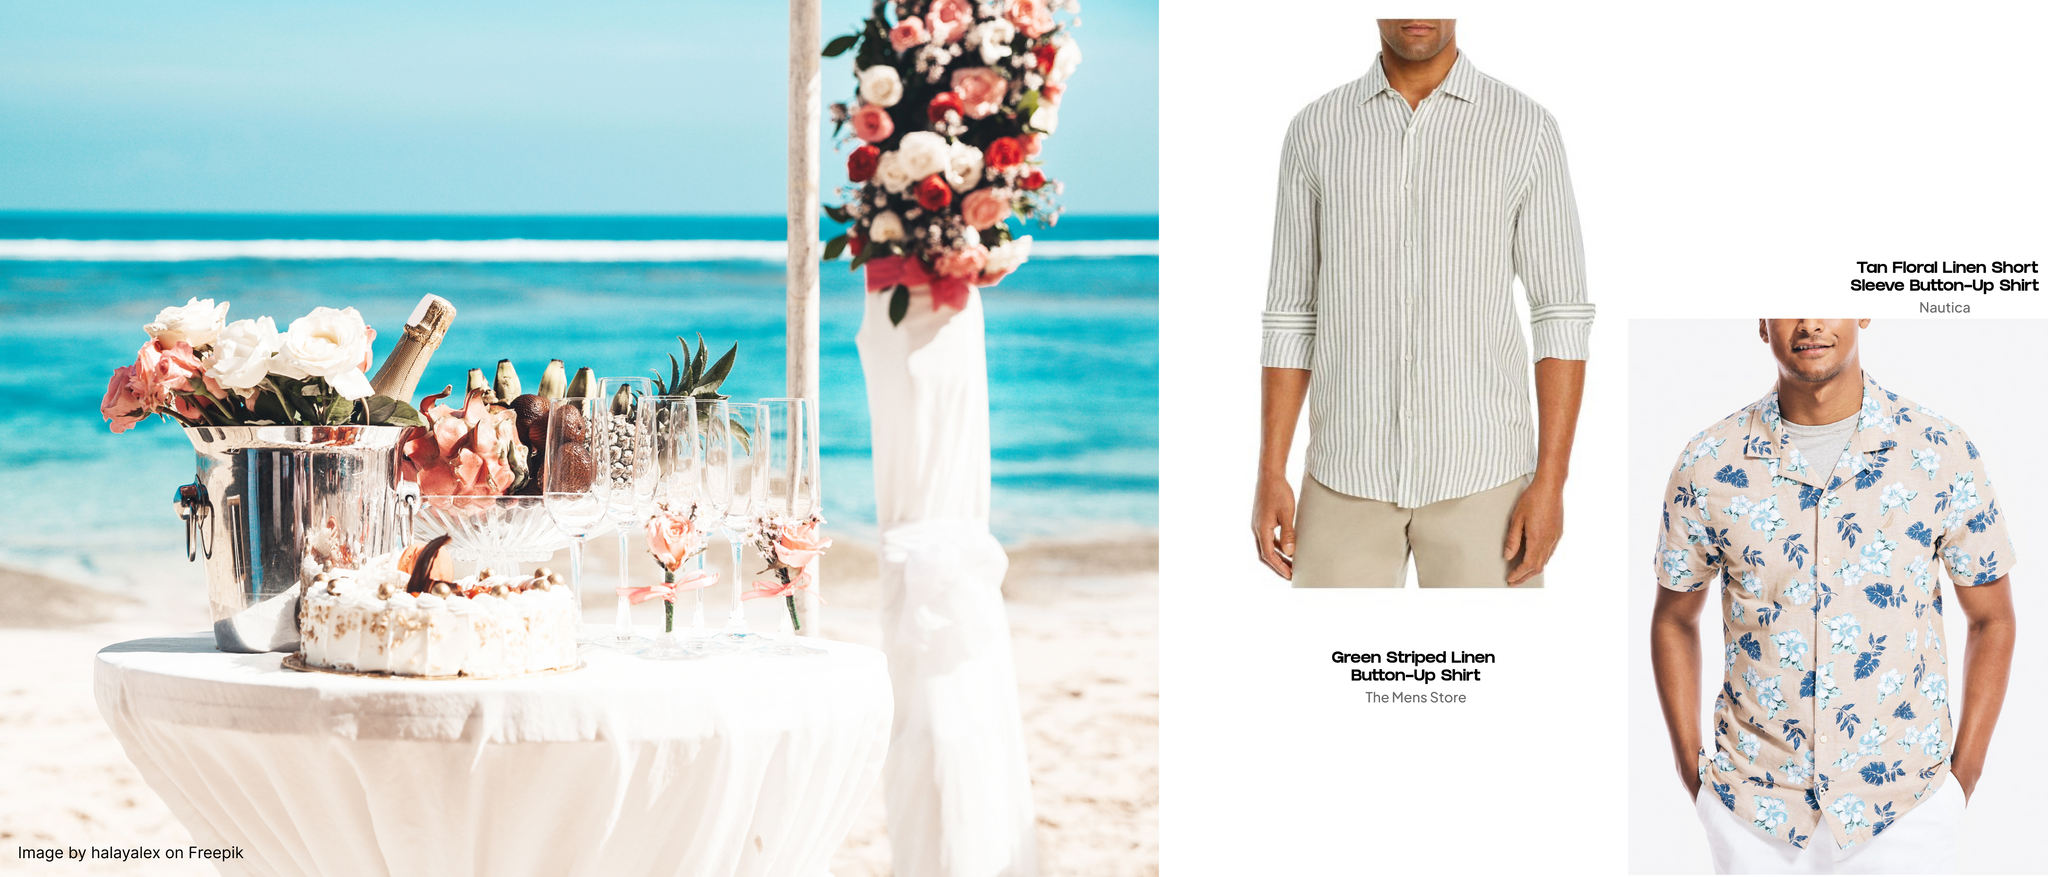 Casula beach wedding attire